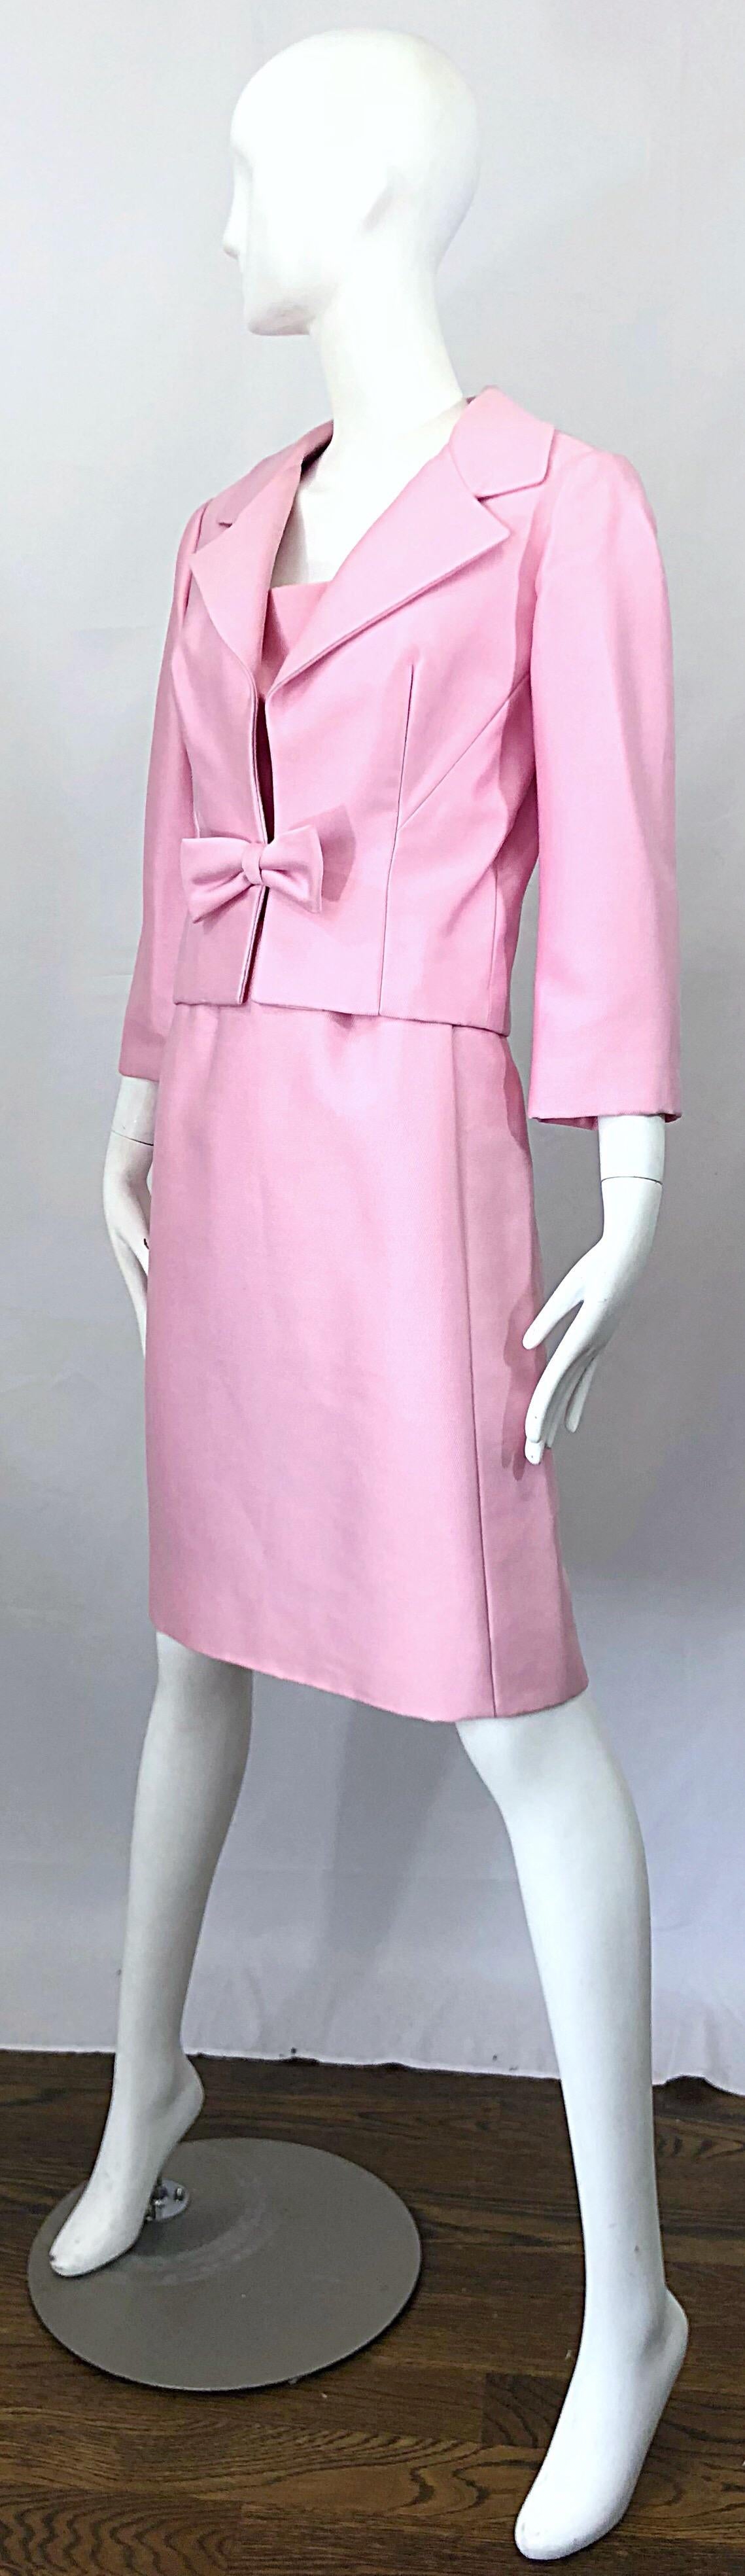 Women's Chic 1960s Pat Sandler Light Pink Vintage 60s Silk Shift Dress and Jacket Suit For Sale